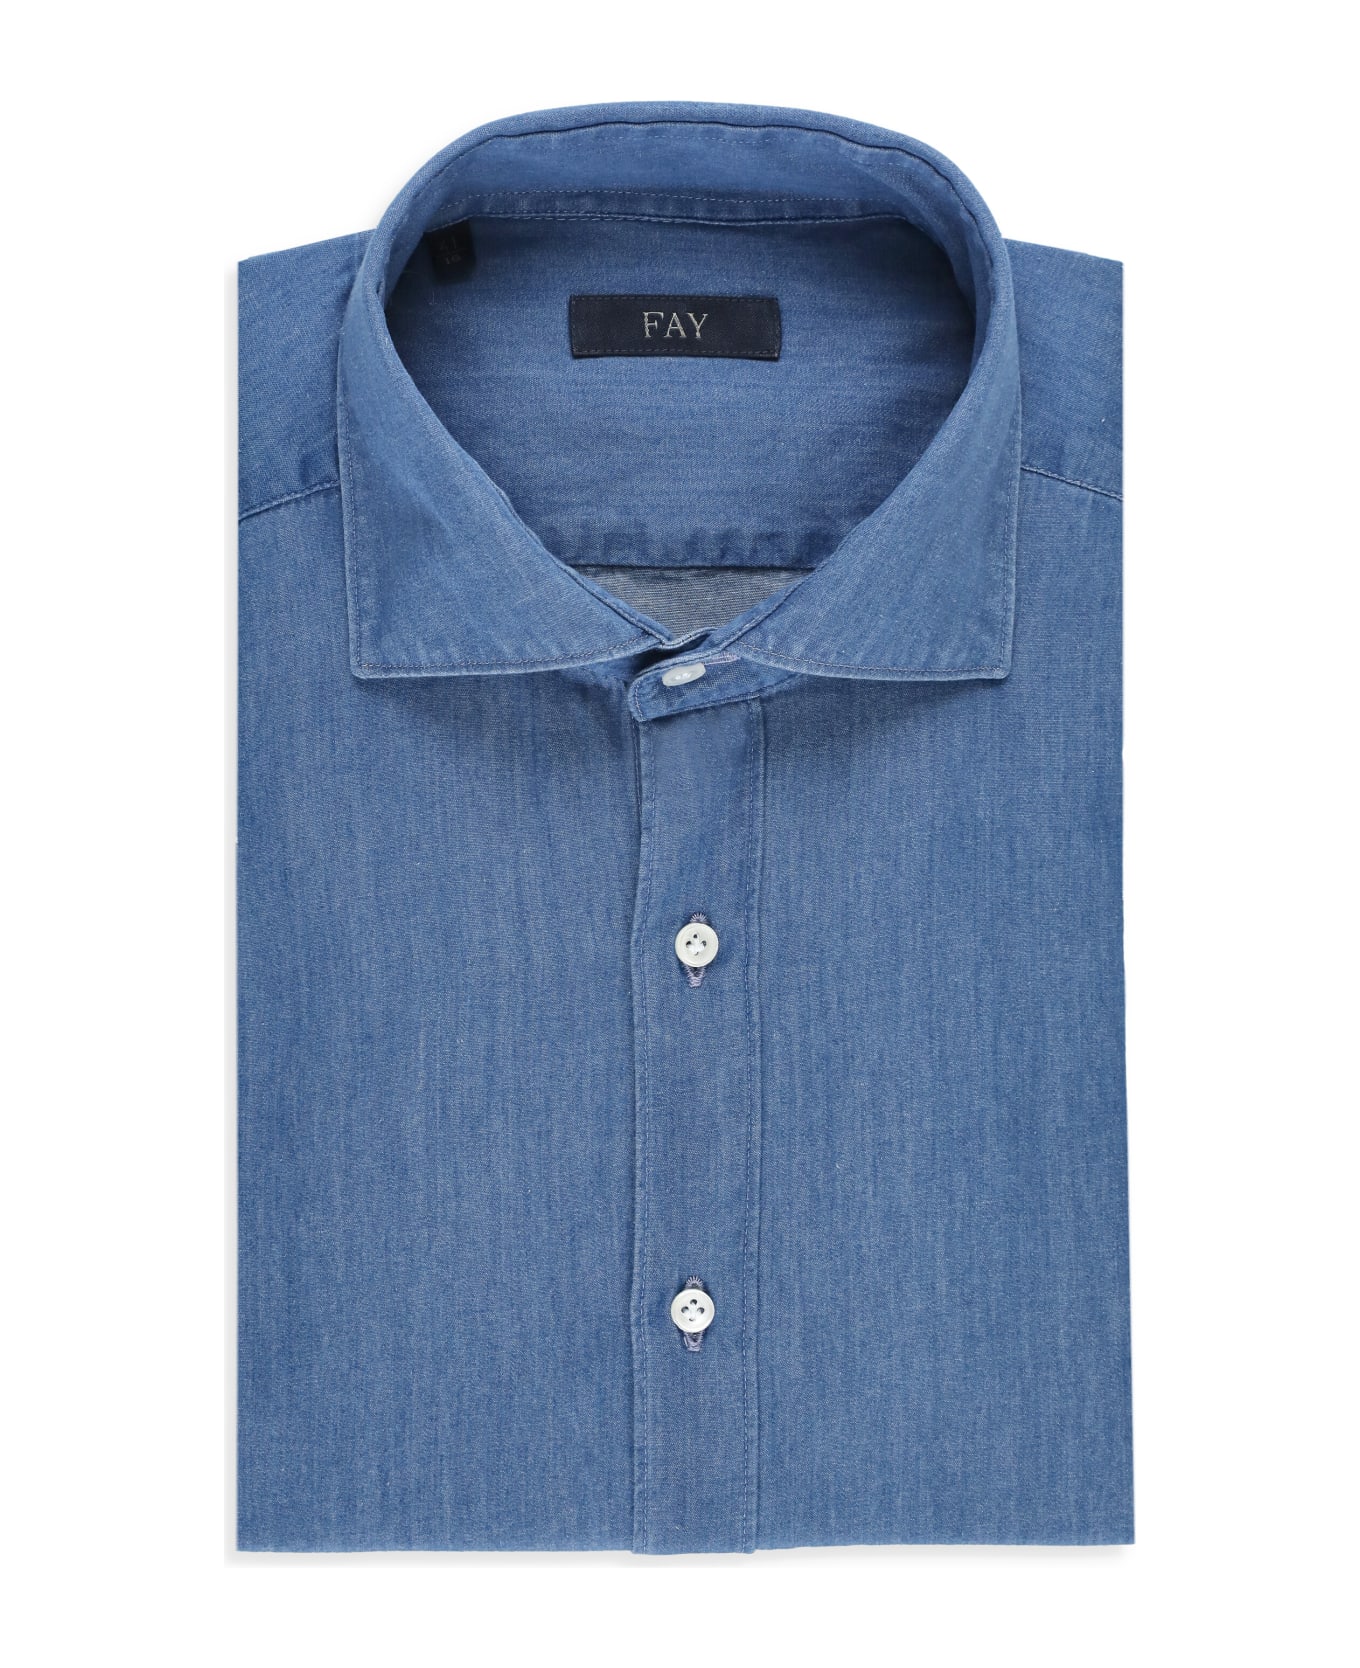 Fay Denim Shirt - Azzurro